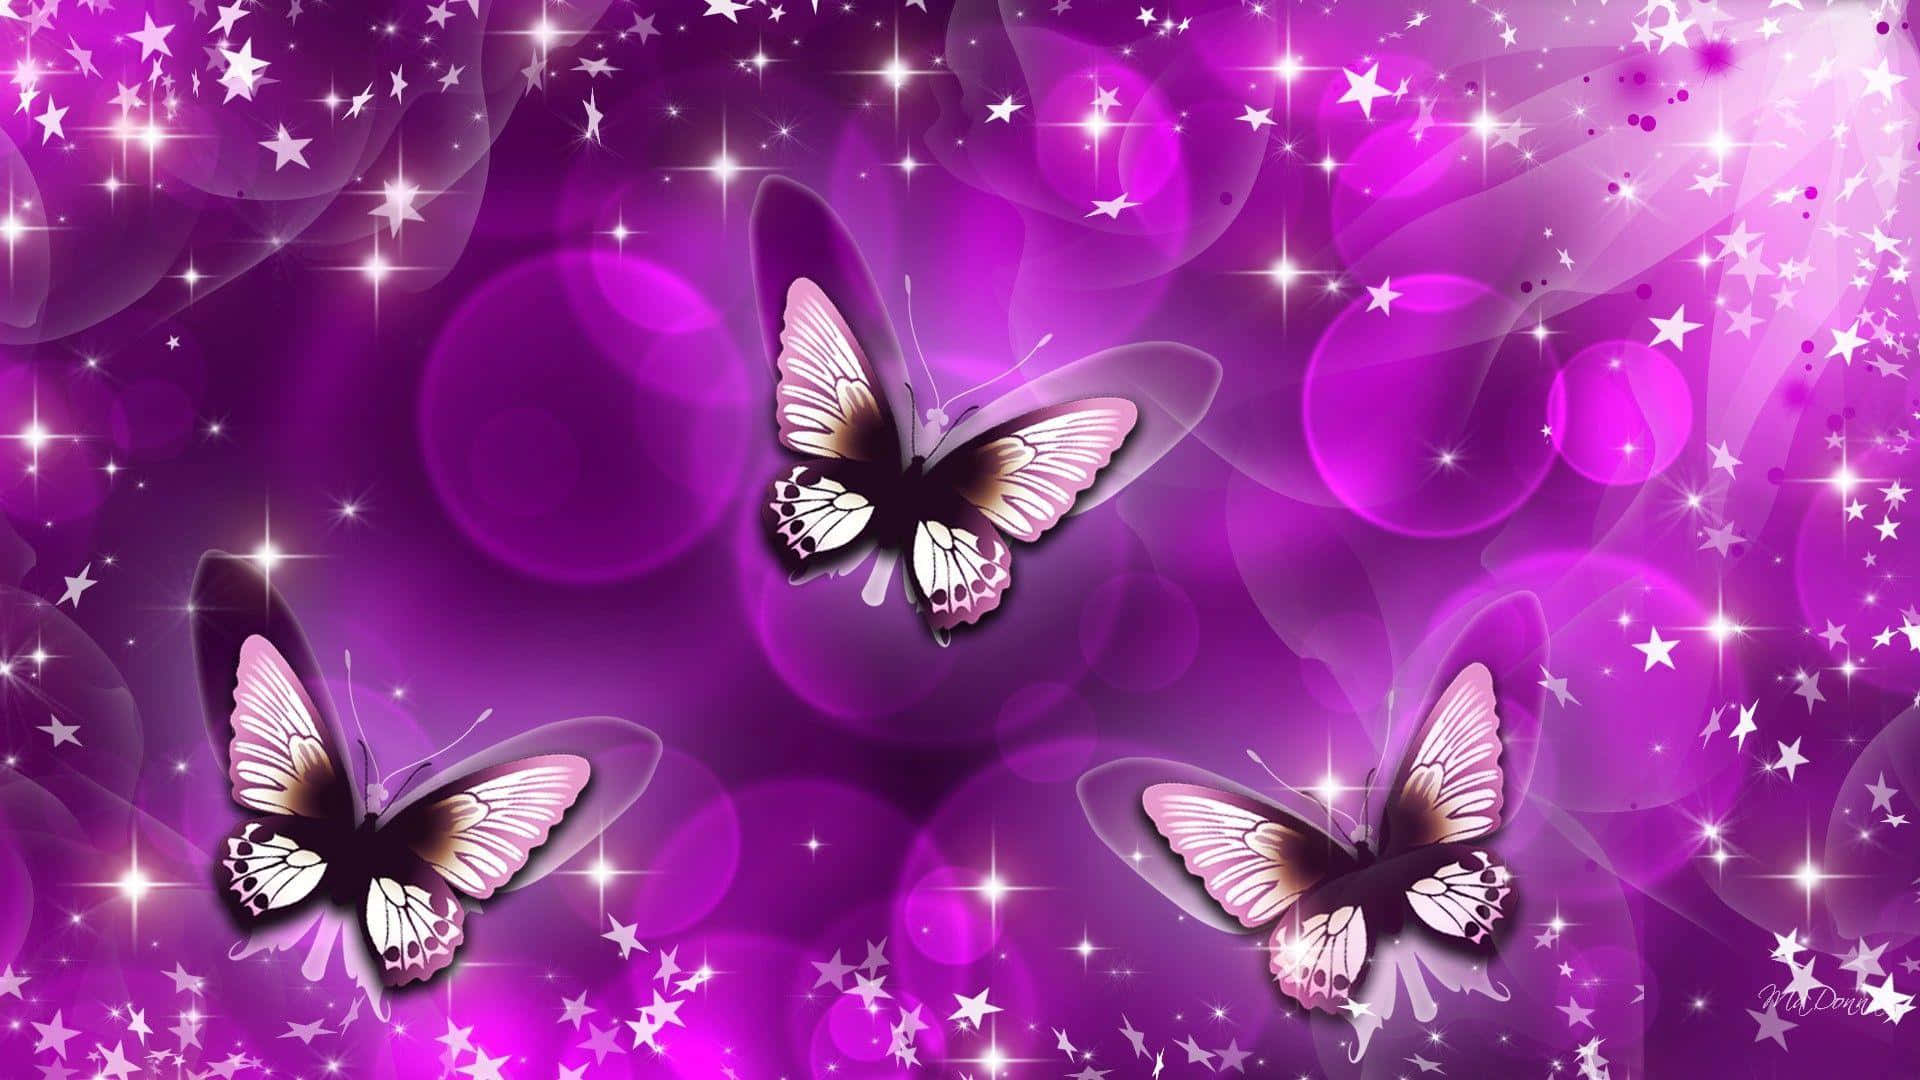 A beautiful Purple Butterfly on an Iphone in Full HD Wallpaper